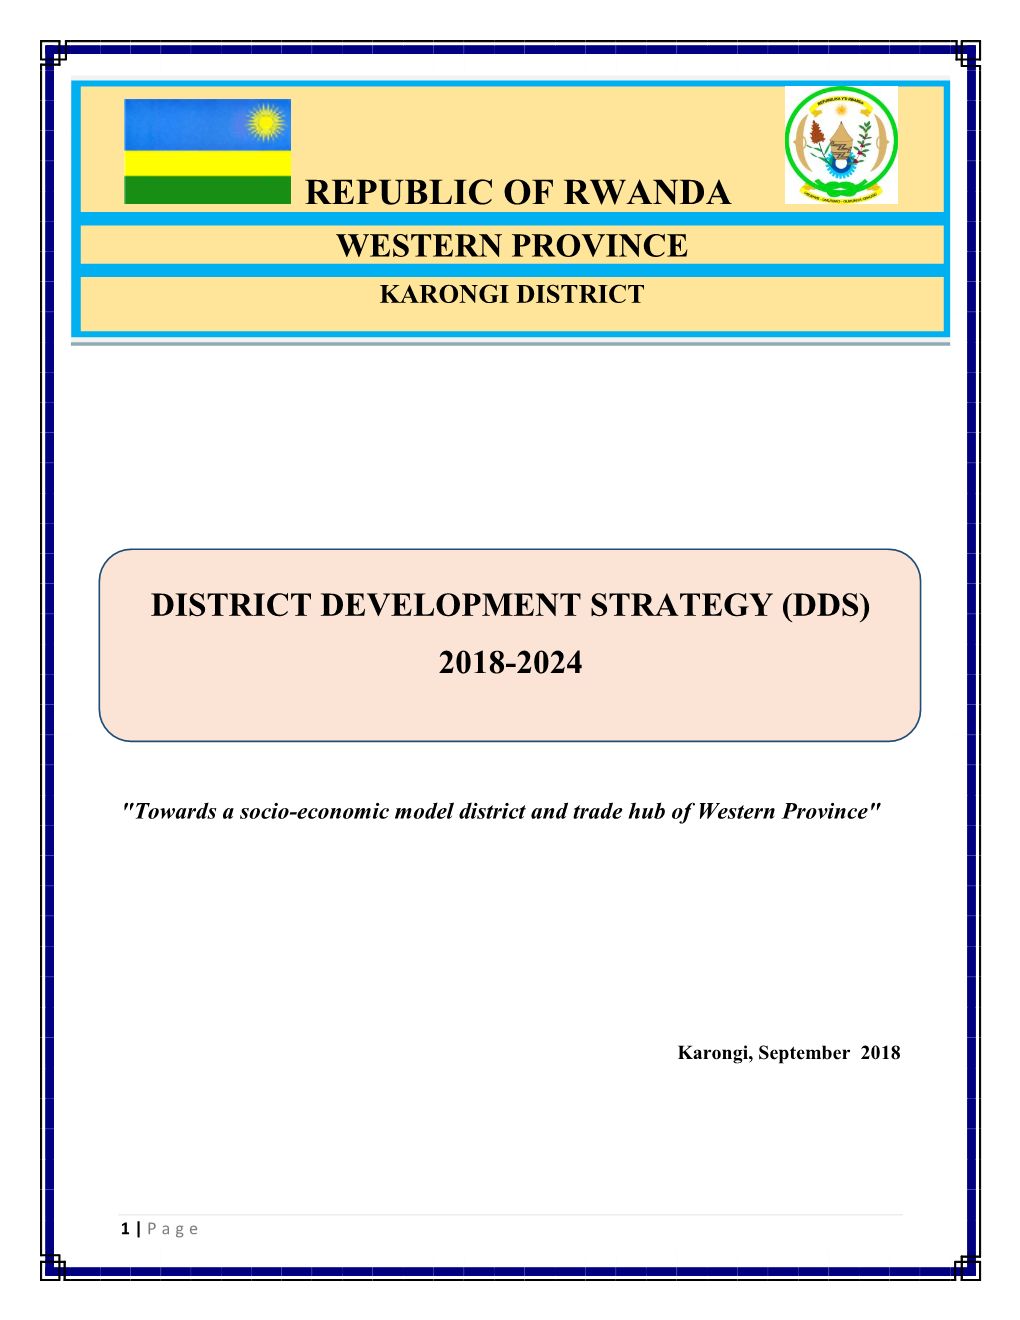 Republic of Rwanda Western Province